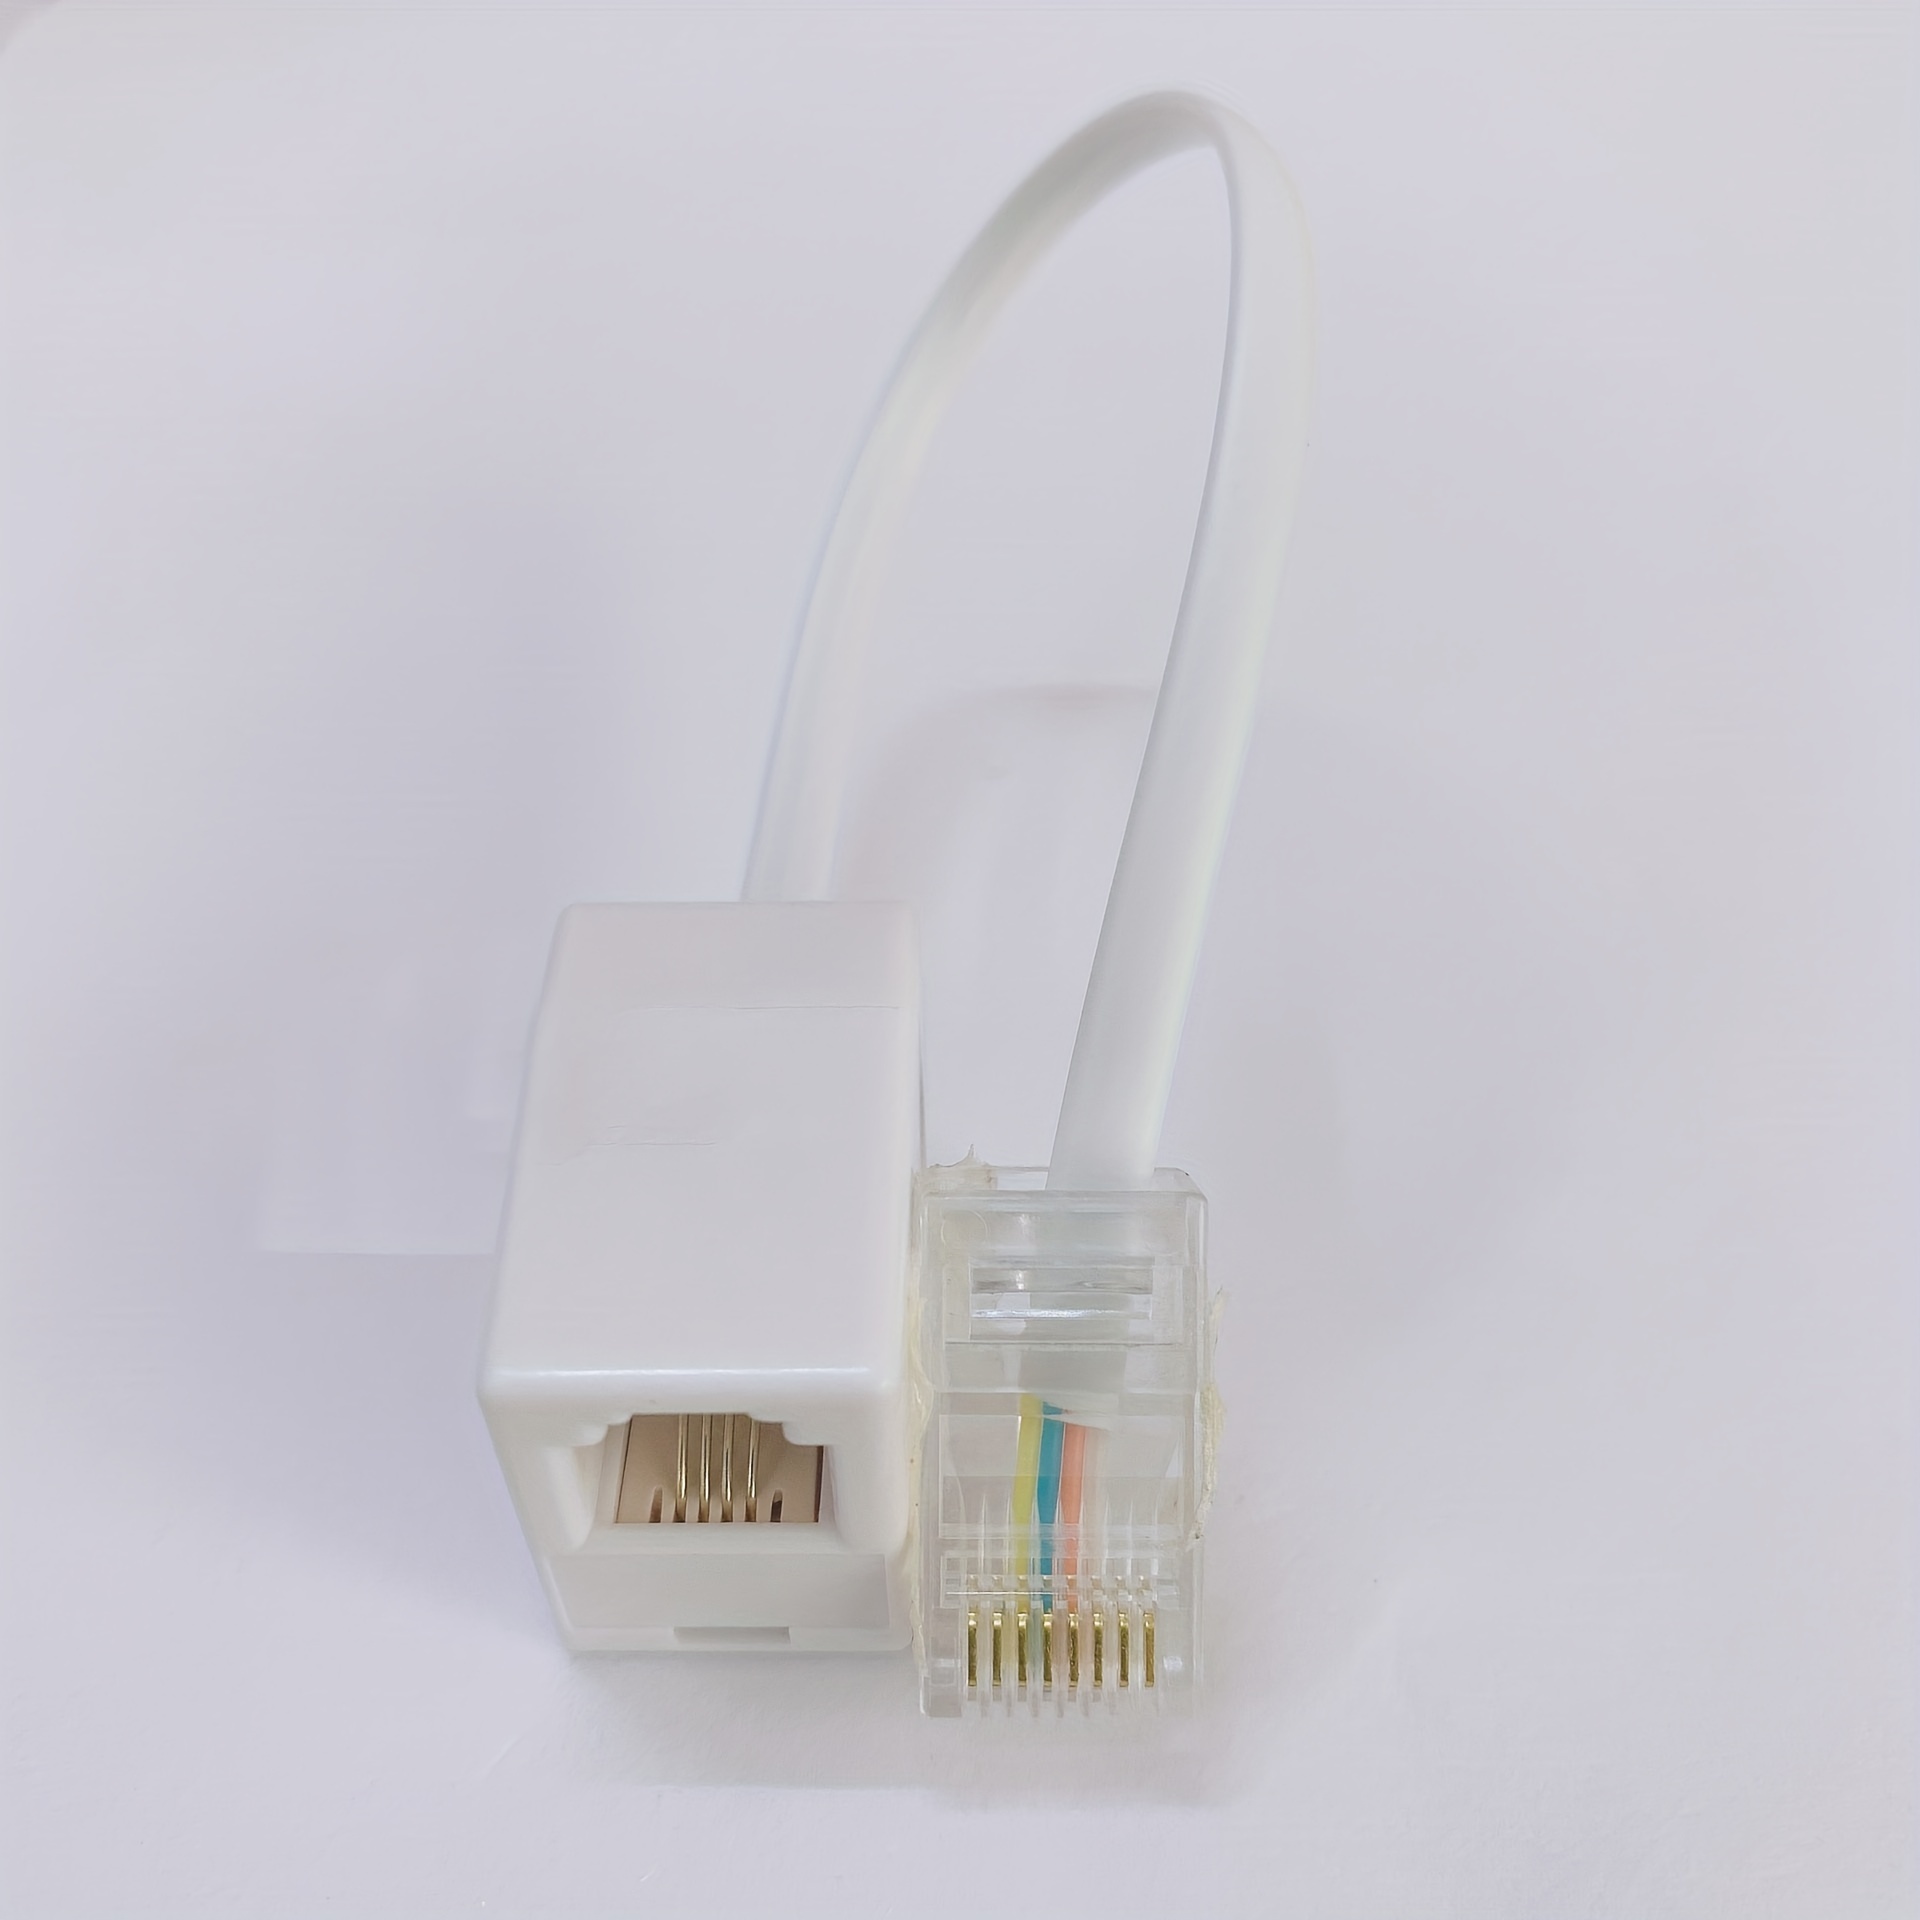 1M Rj11 To Rj45 Cable Rj11 To Rj45 Cable Phone Telephone Cord Rj11 6P4c To  Rj45 8P8c Connector Plug Cable For Landline Telephone (White) 